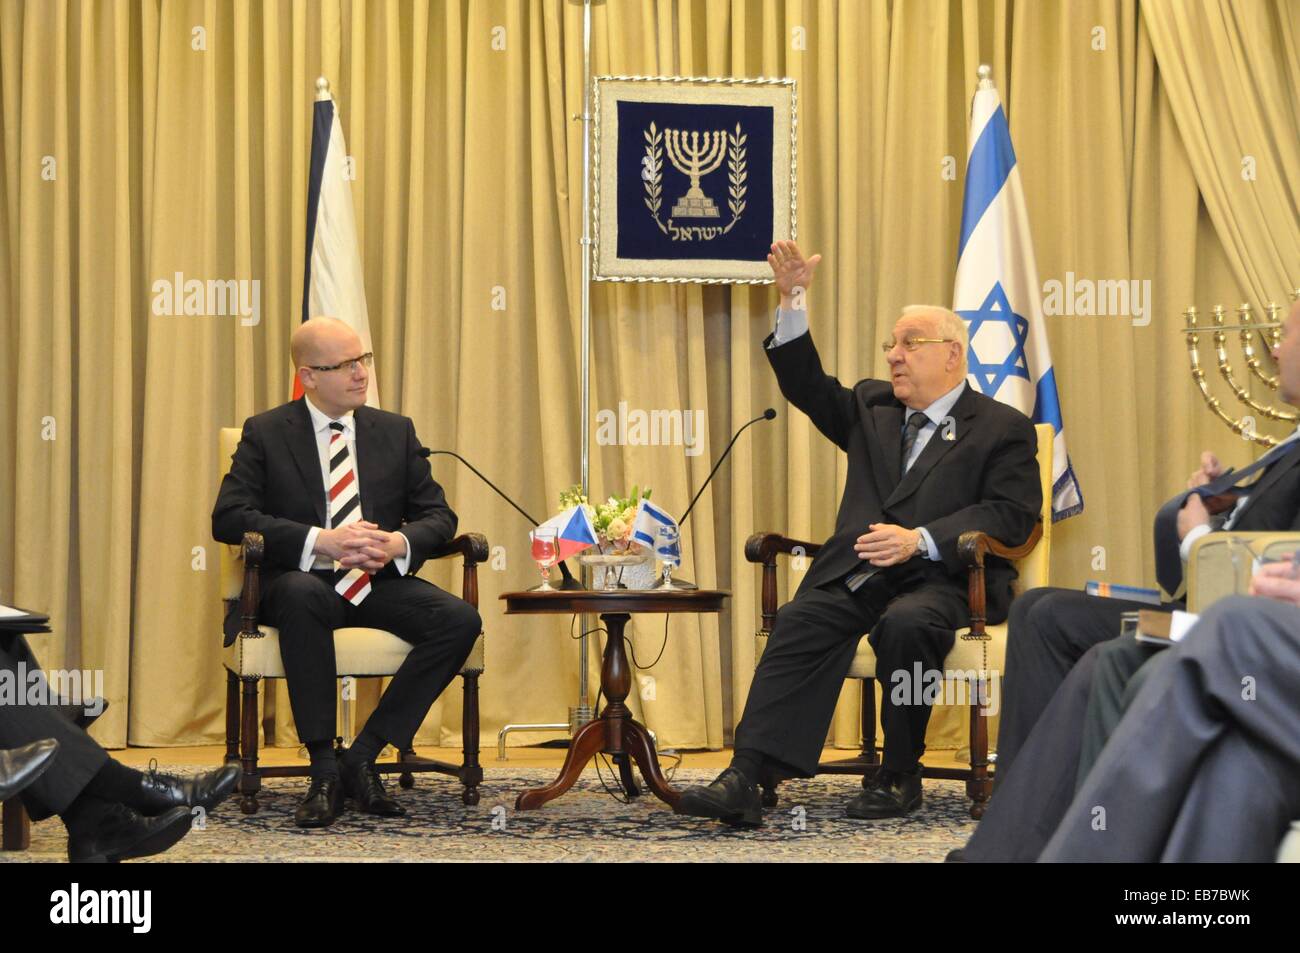 Czech-Israeli relations are exceptional, Israeli President Reuven Rivlin (right) said during a meeting with Czech Prime Minister Bohuslav Sobotka (left) in Jerusalem, Israel, on November 26, 2014. (CTK Photo/Sarka Dvorakova) Stock Photo